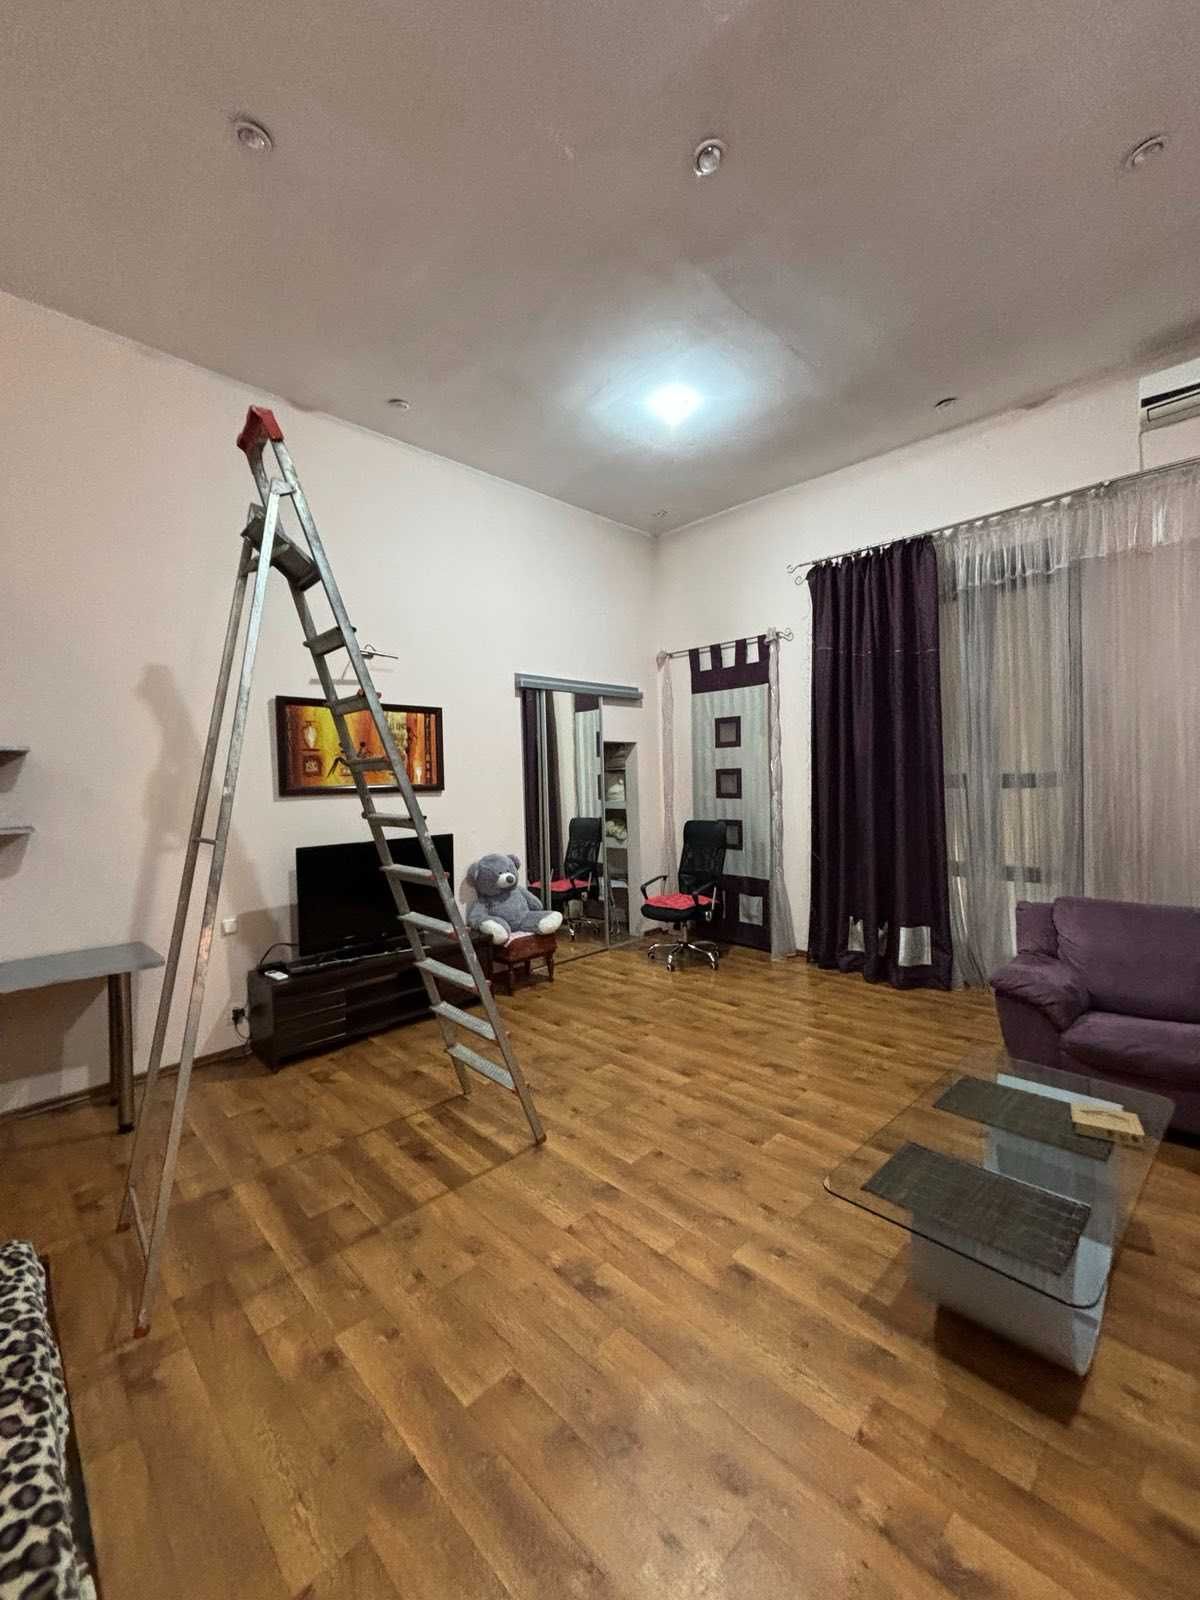 2 комнатная  квартира в Бельгийке Александровский пр-т. 65 000у.е.